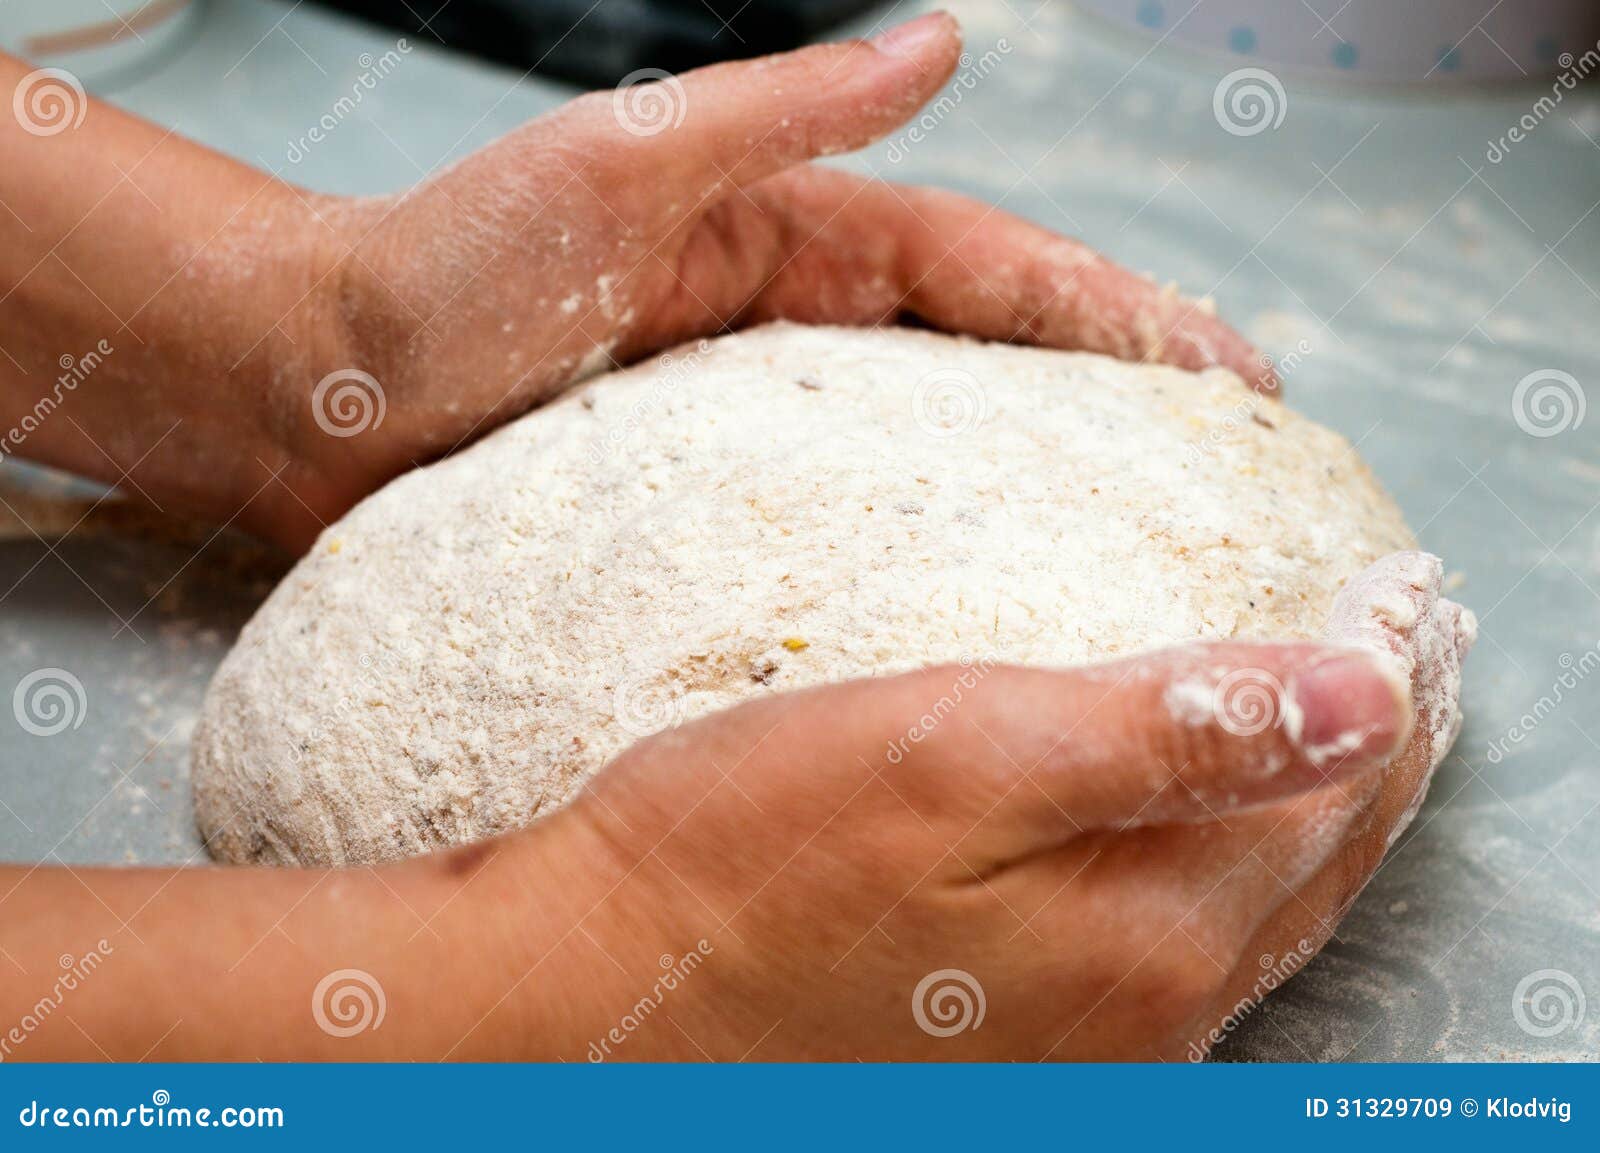 baker shaping load of bread